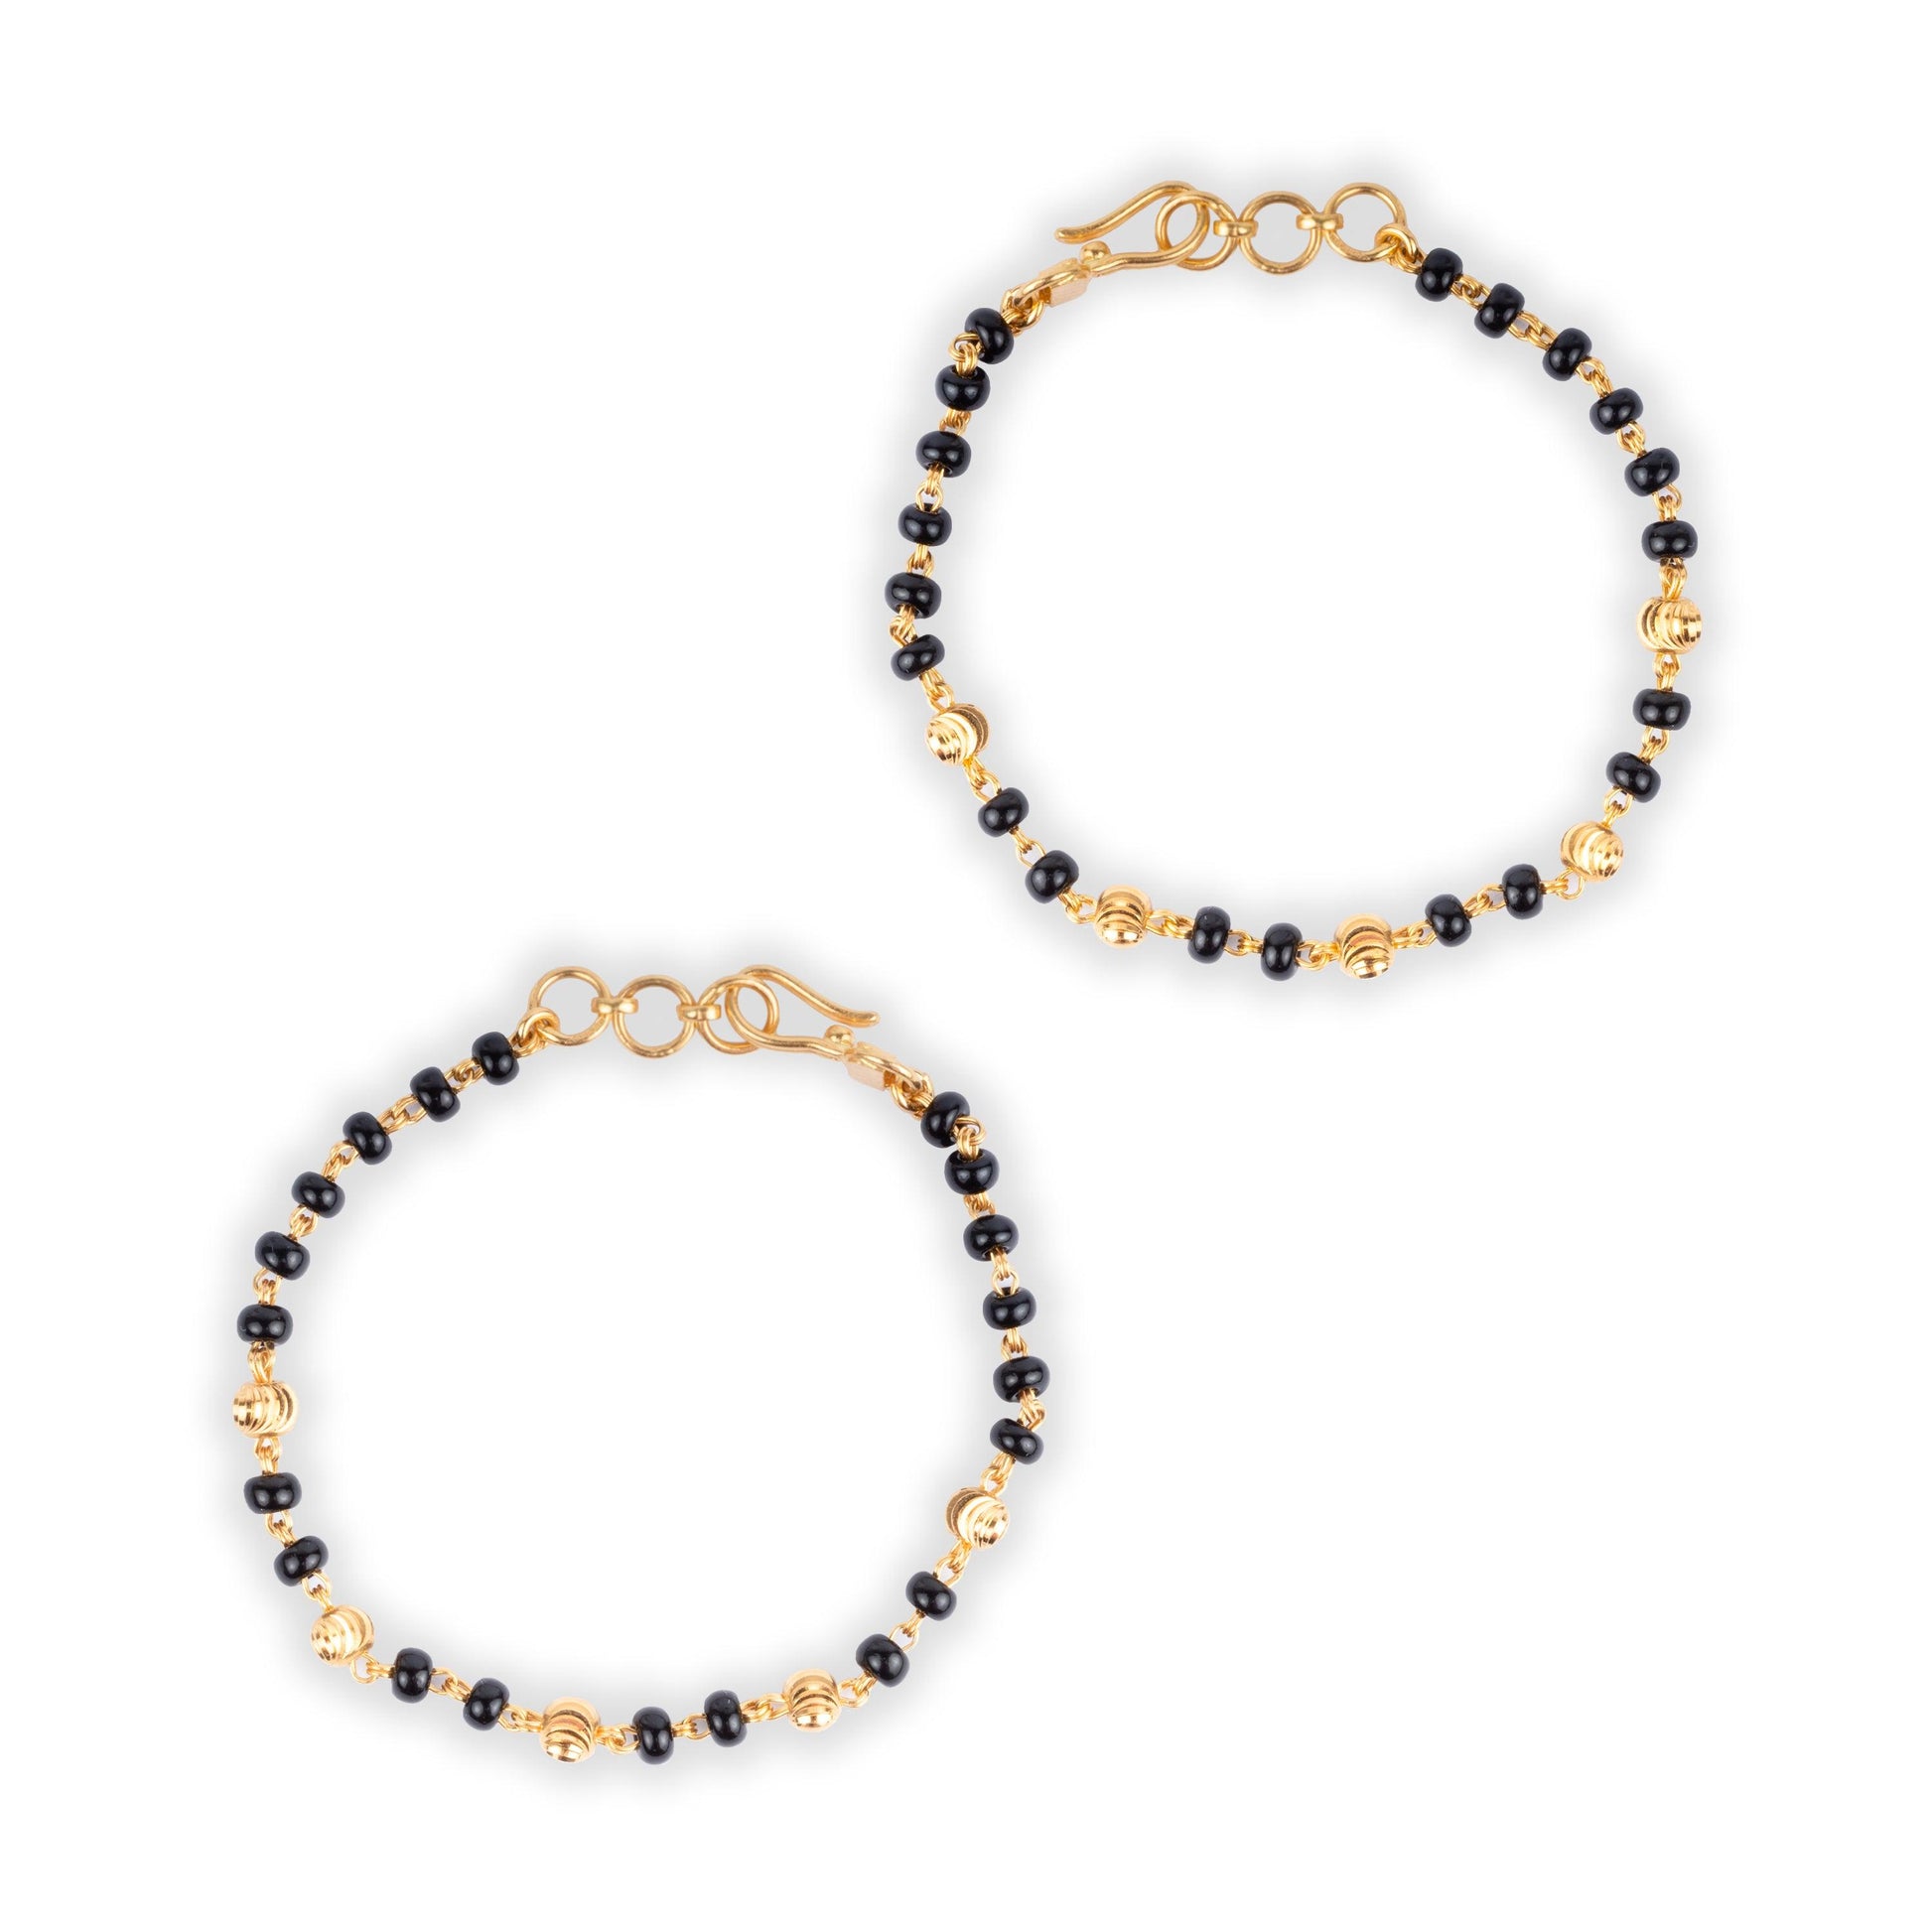 22ct Gold Black Bead Children's Bracelets with Hook Clasp CBR-8270 - Minar Jewellers